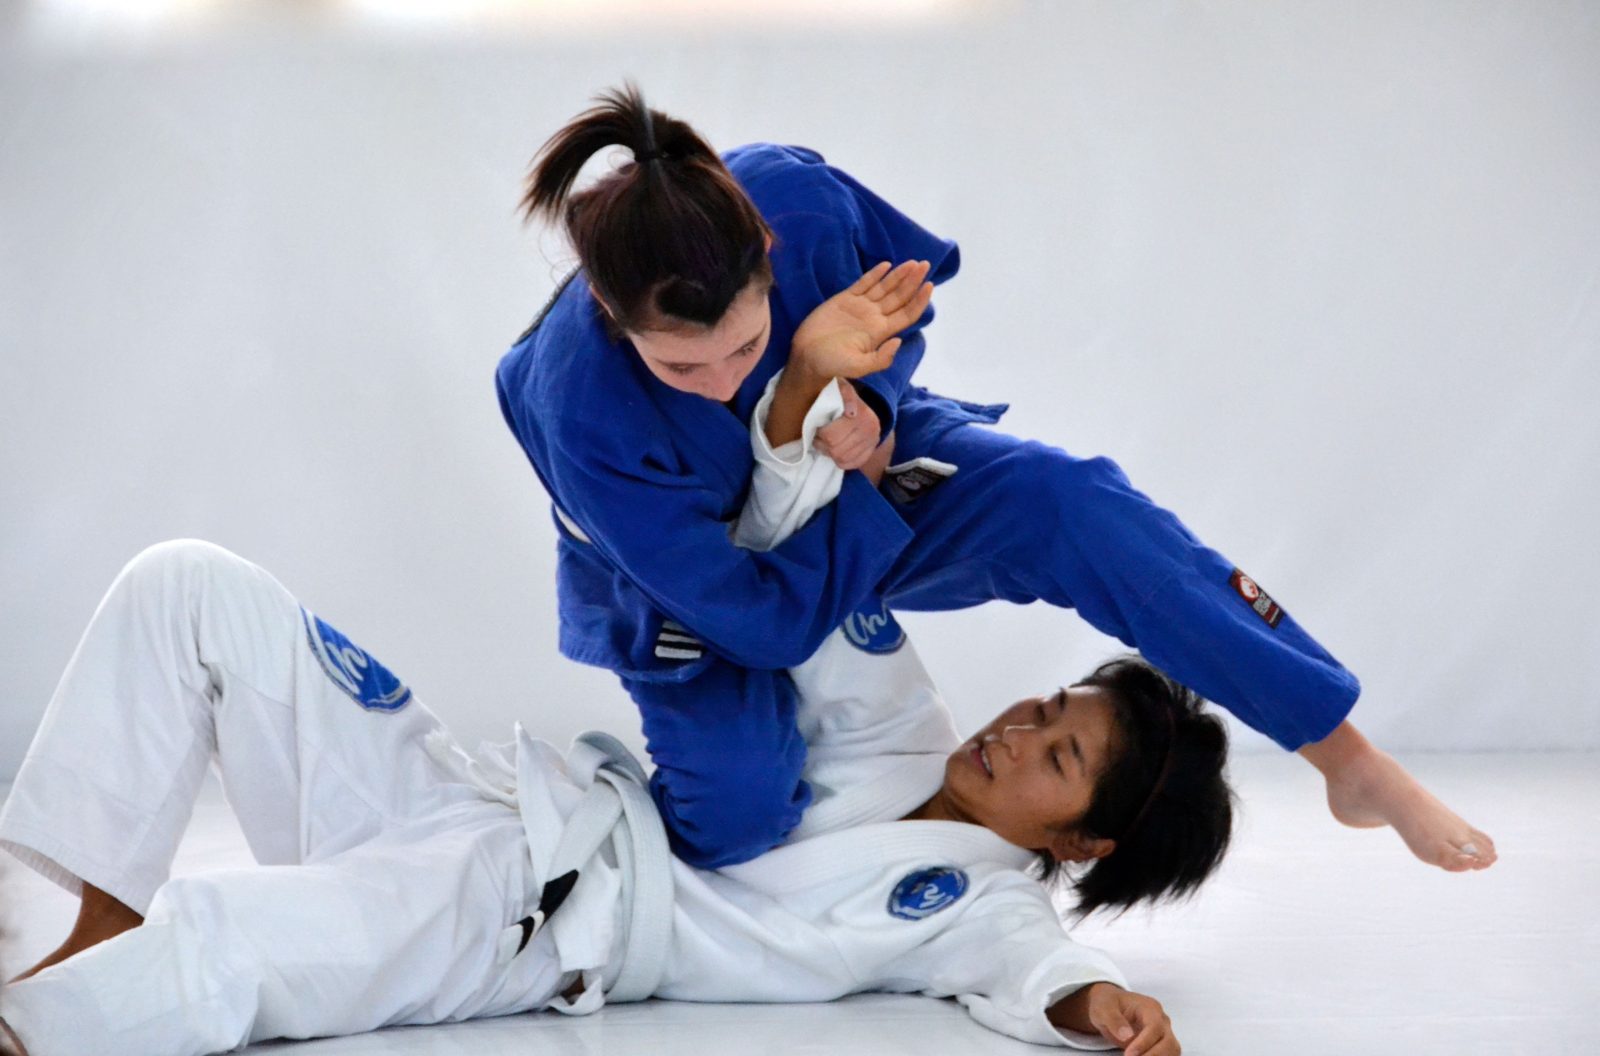 Modern martial arts for self-defence